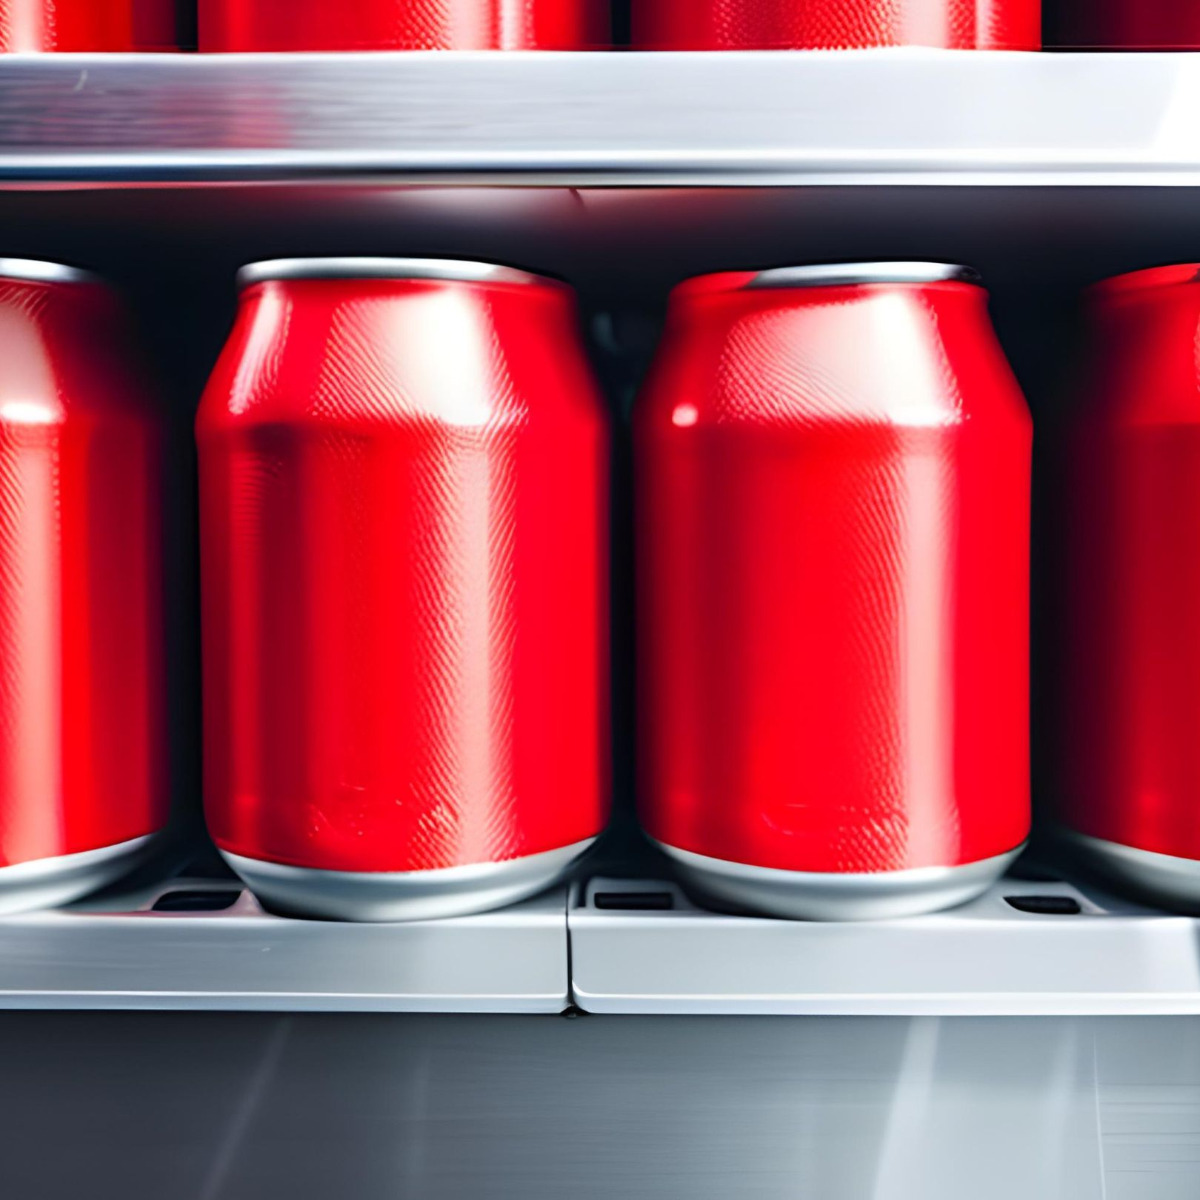 Case Studies on Promotional Coca-Cola Items